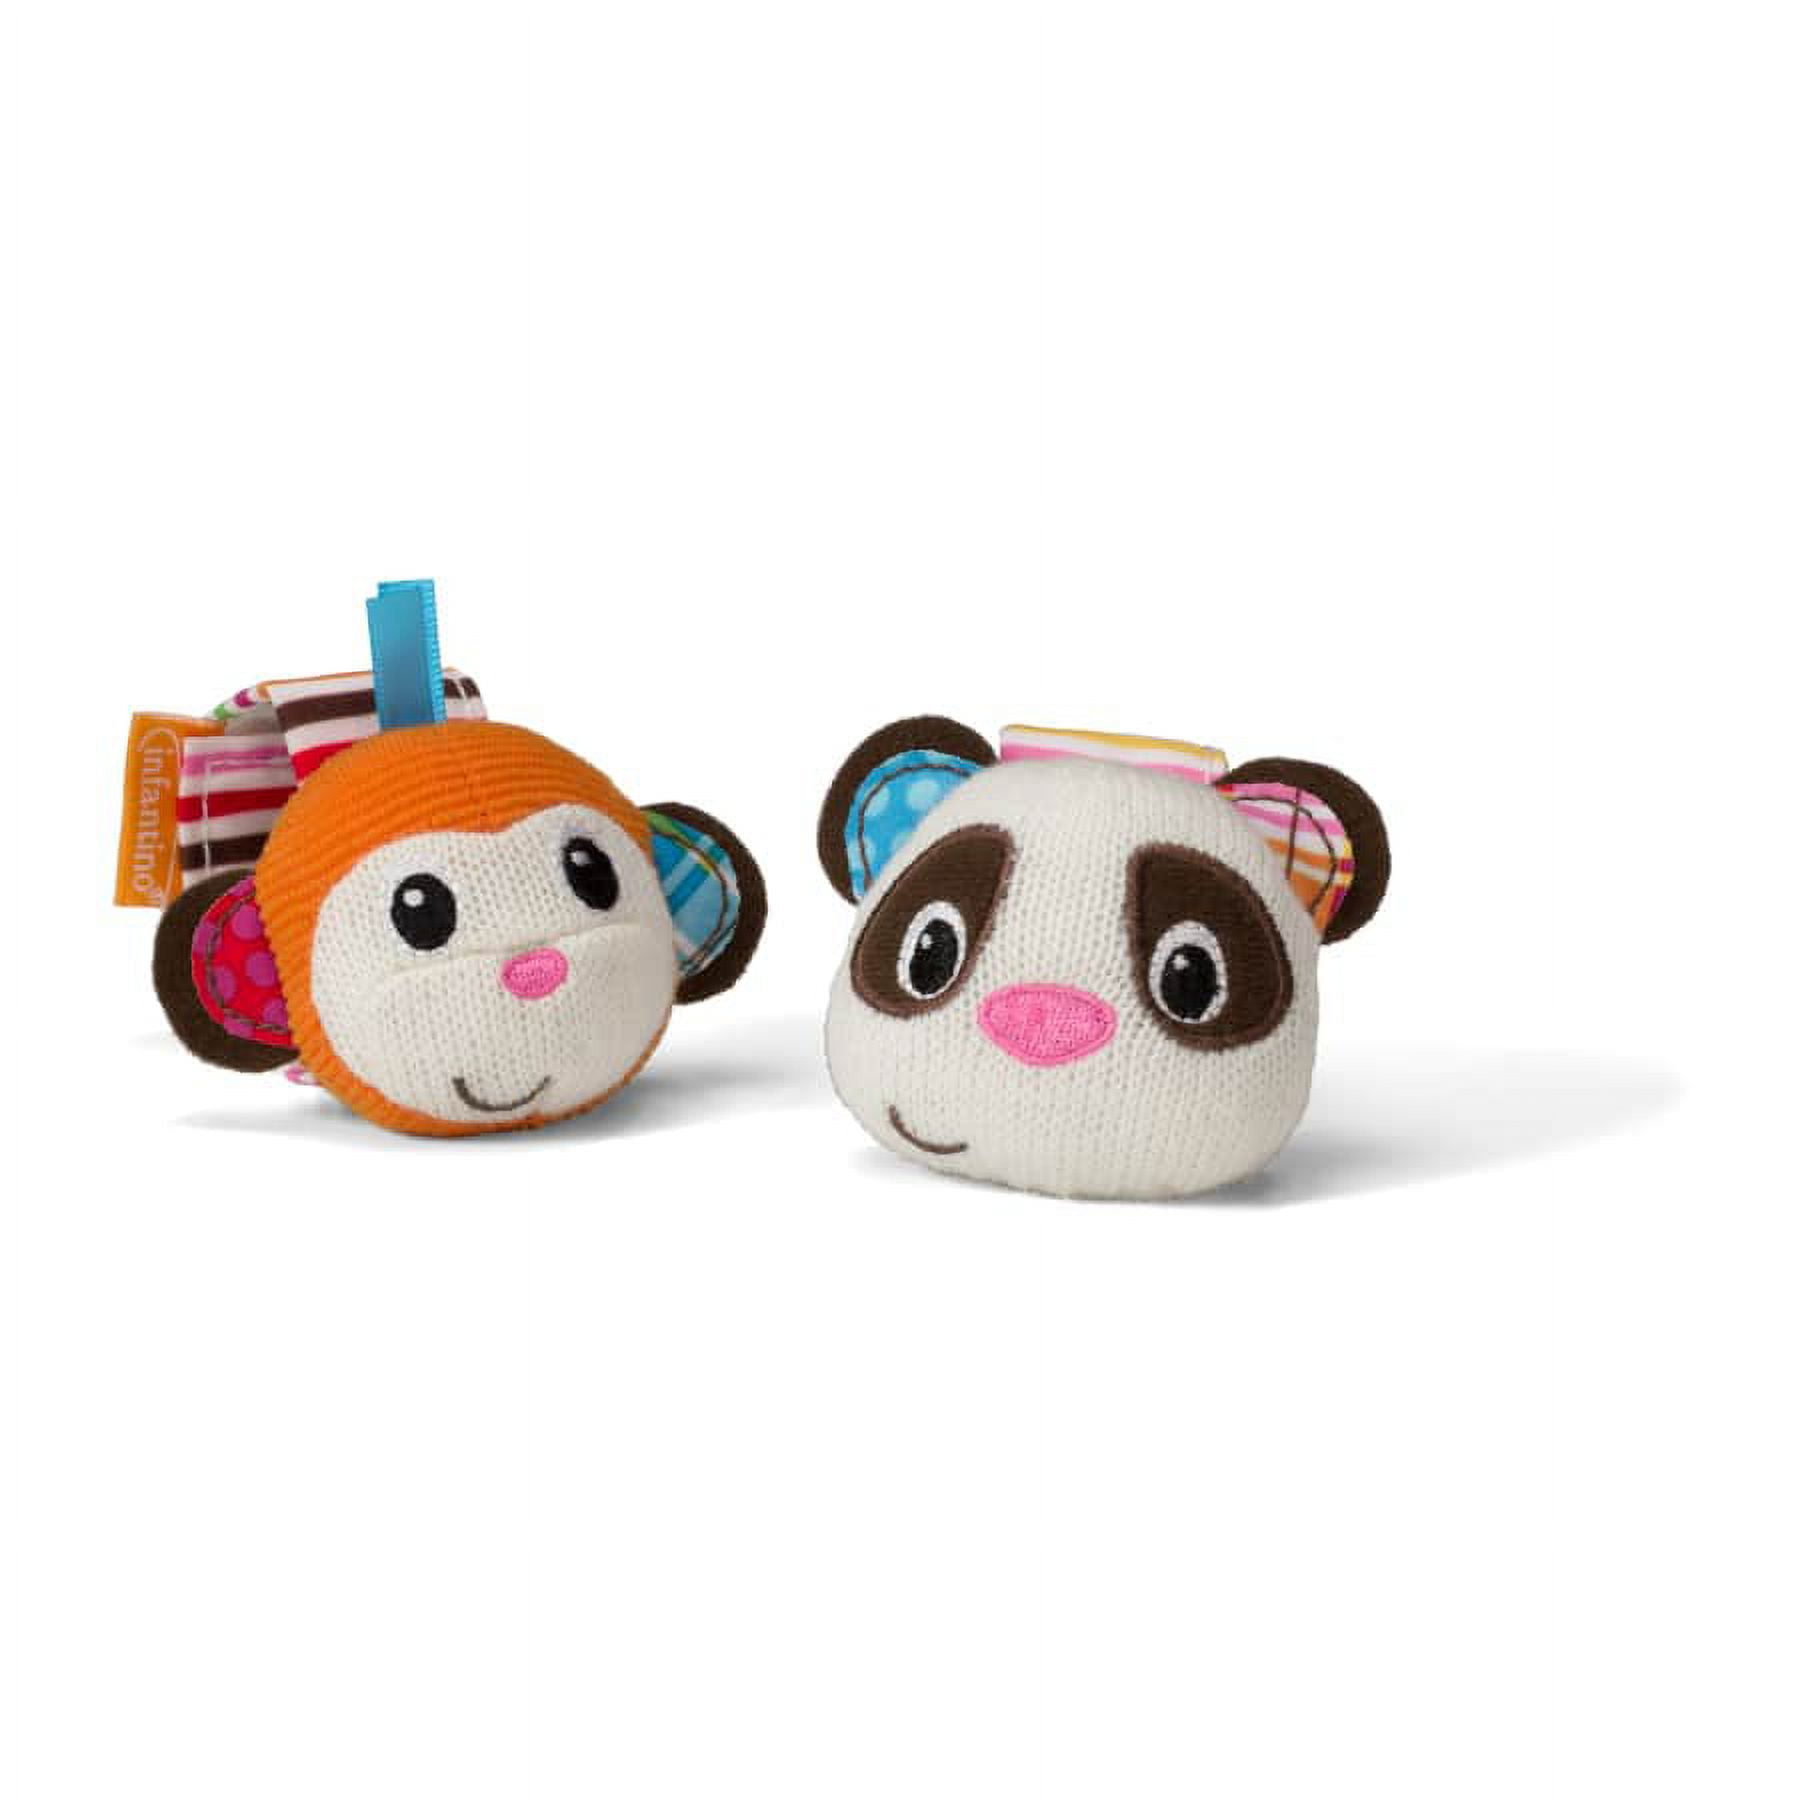  Infantino Baby Wrist Rattles, Monkey and Panda-Themed